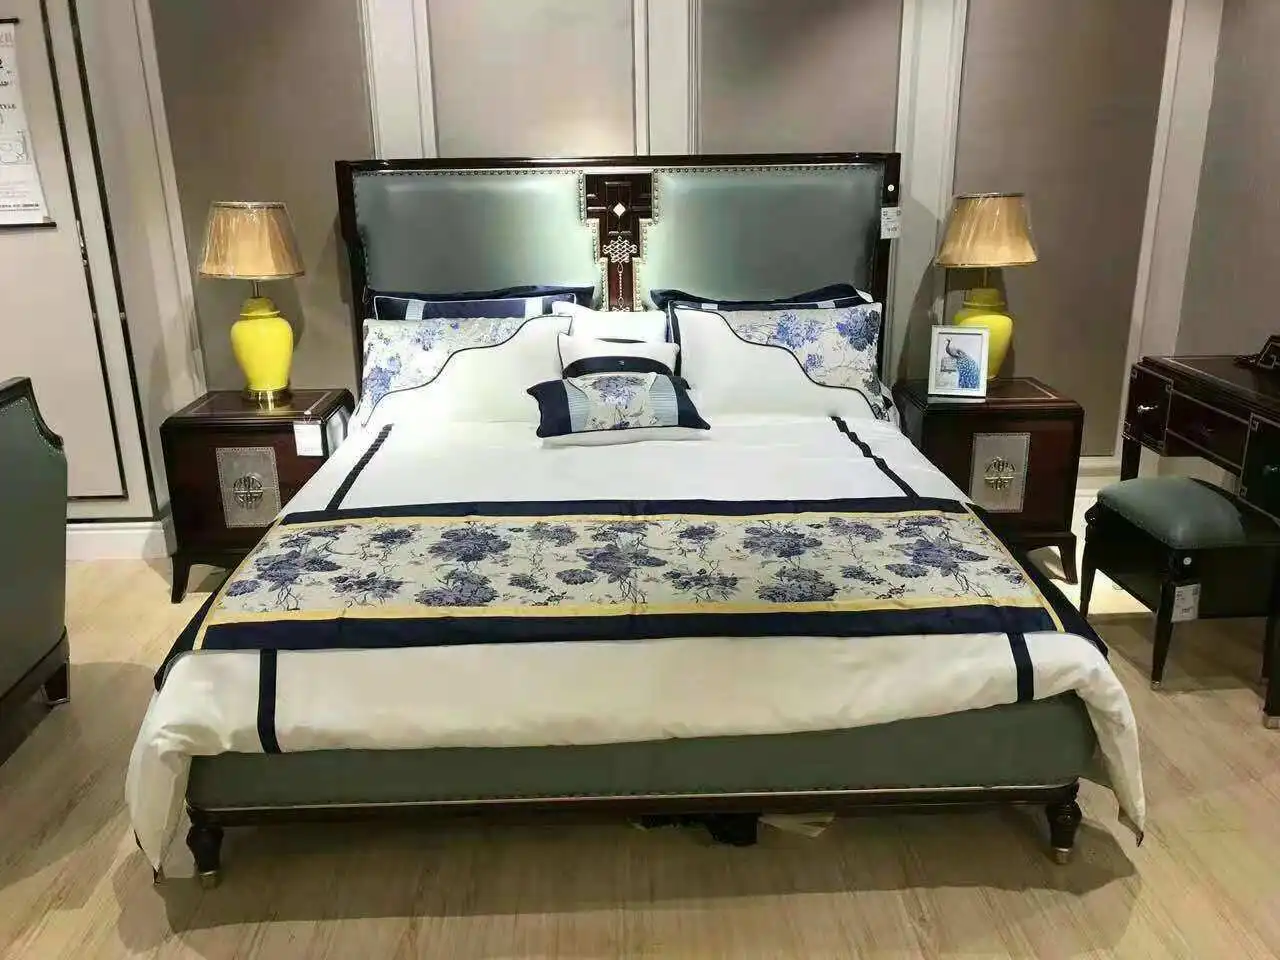 American style bedroom set